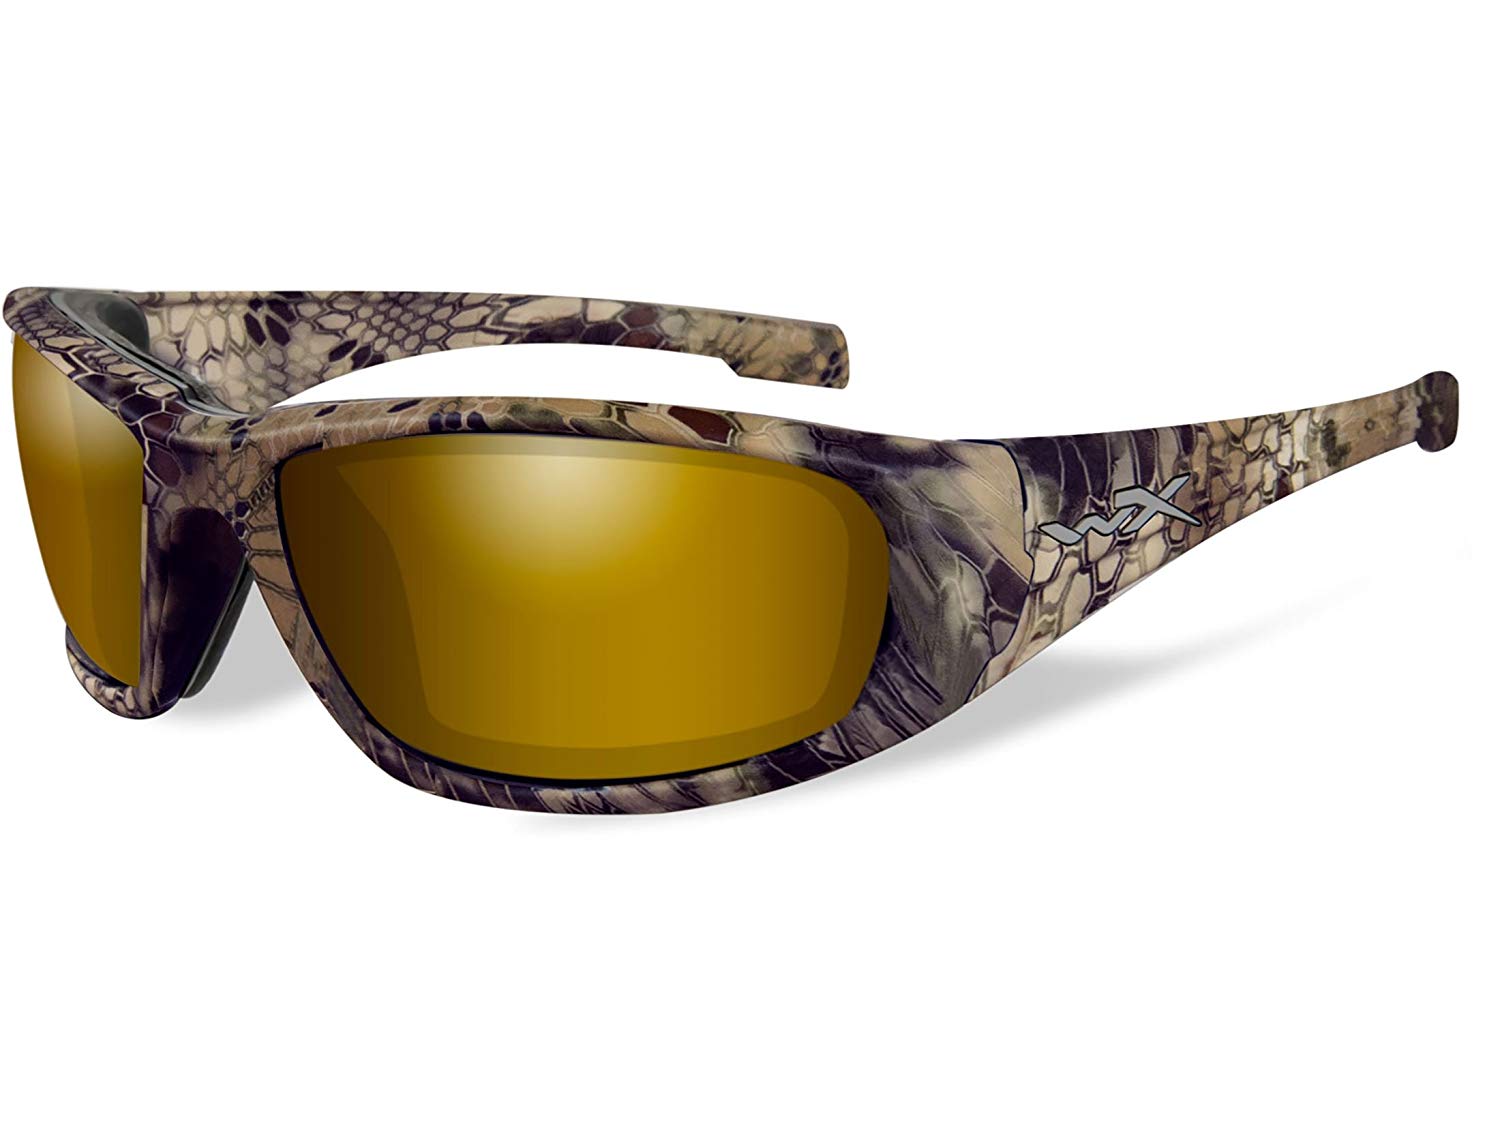 Wiley X WX Boss Men's Sunglasses, Polarized Venice Gold Mirror (Amber) Lens / Kryptek Highlander Frame - CCBOS12 - image 2 of 2